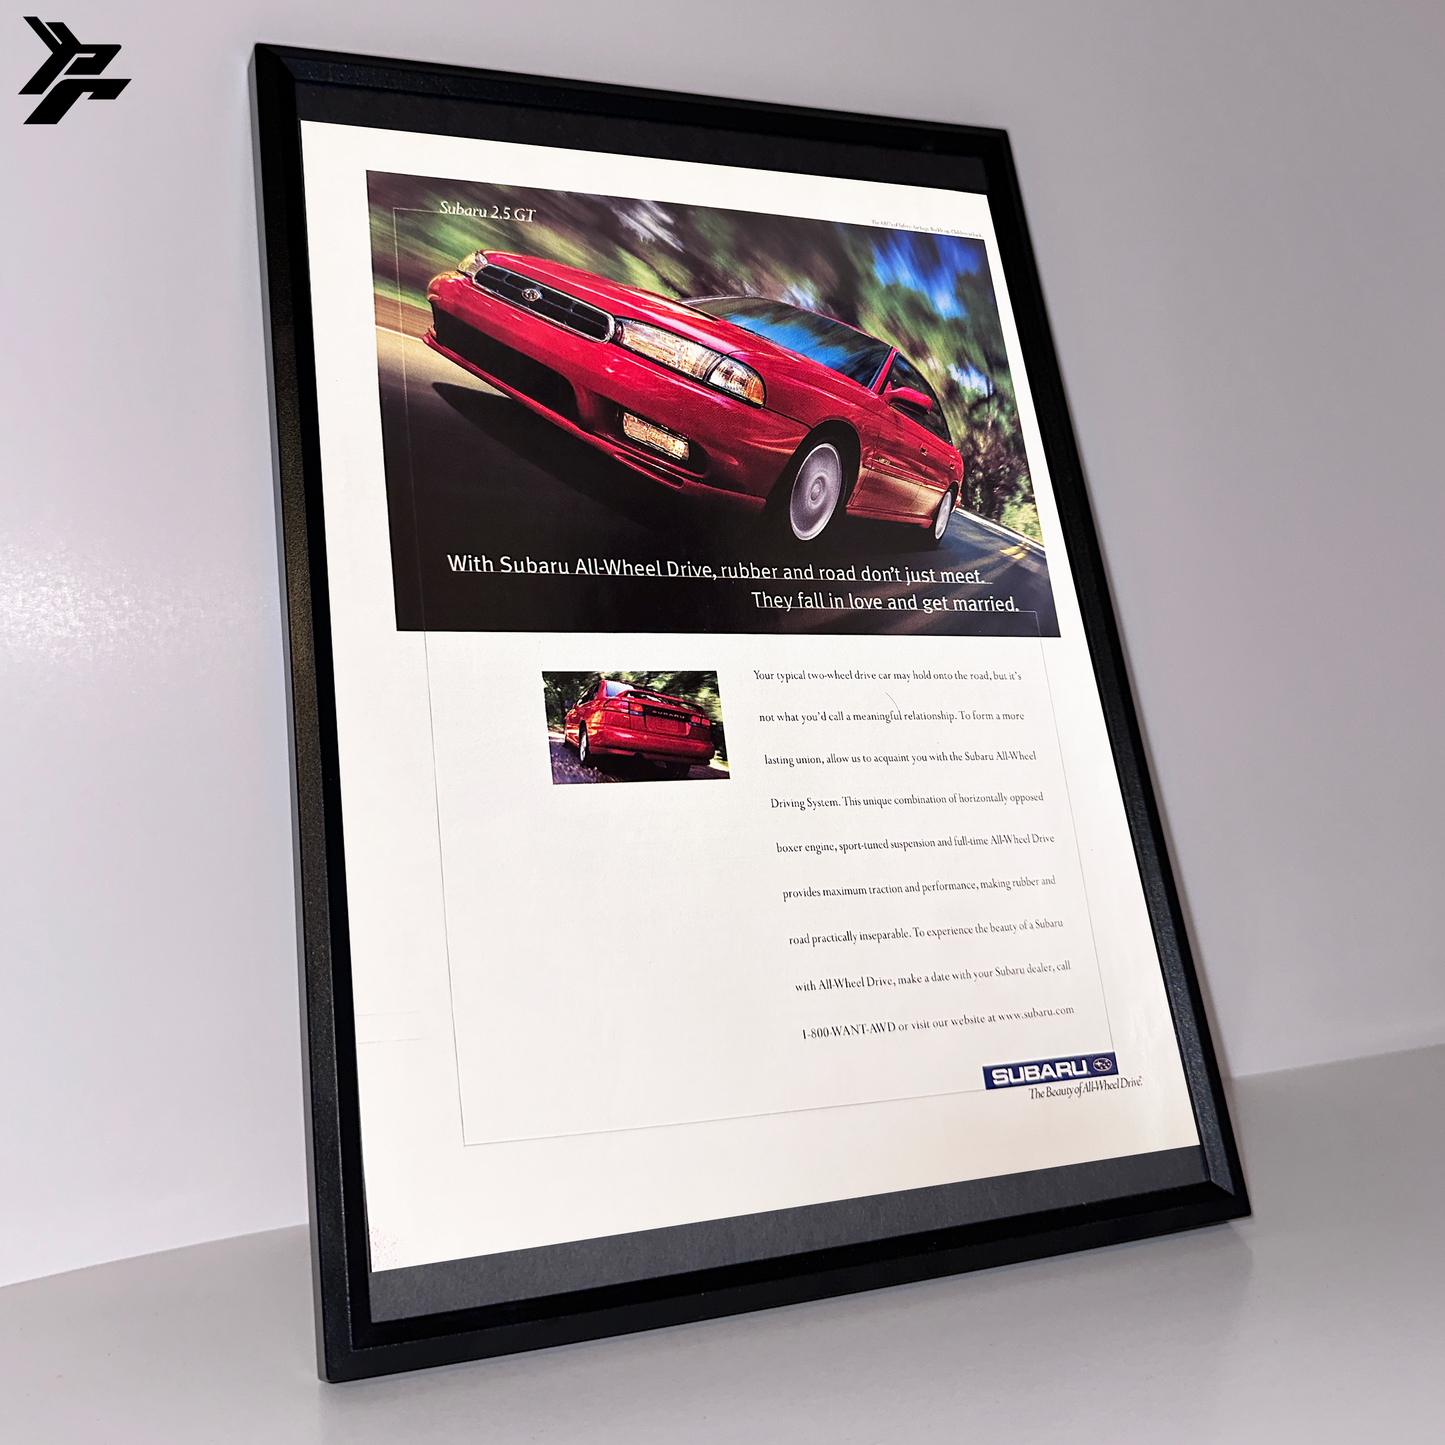 Subaru all wheel drive framed ad